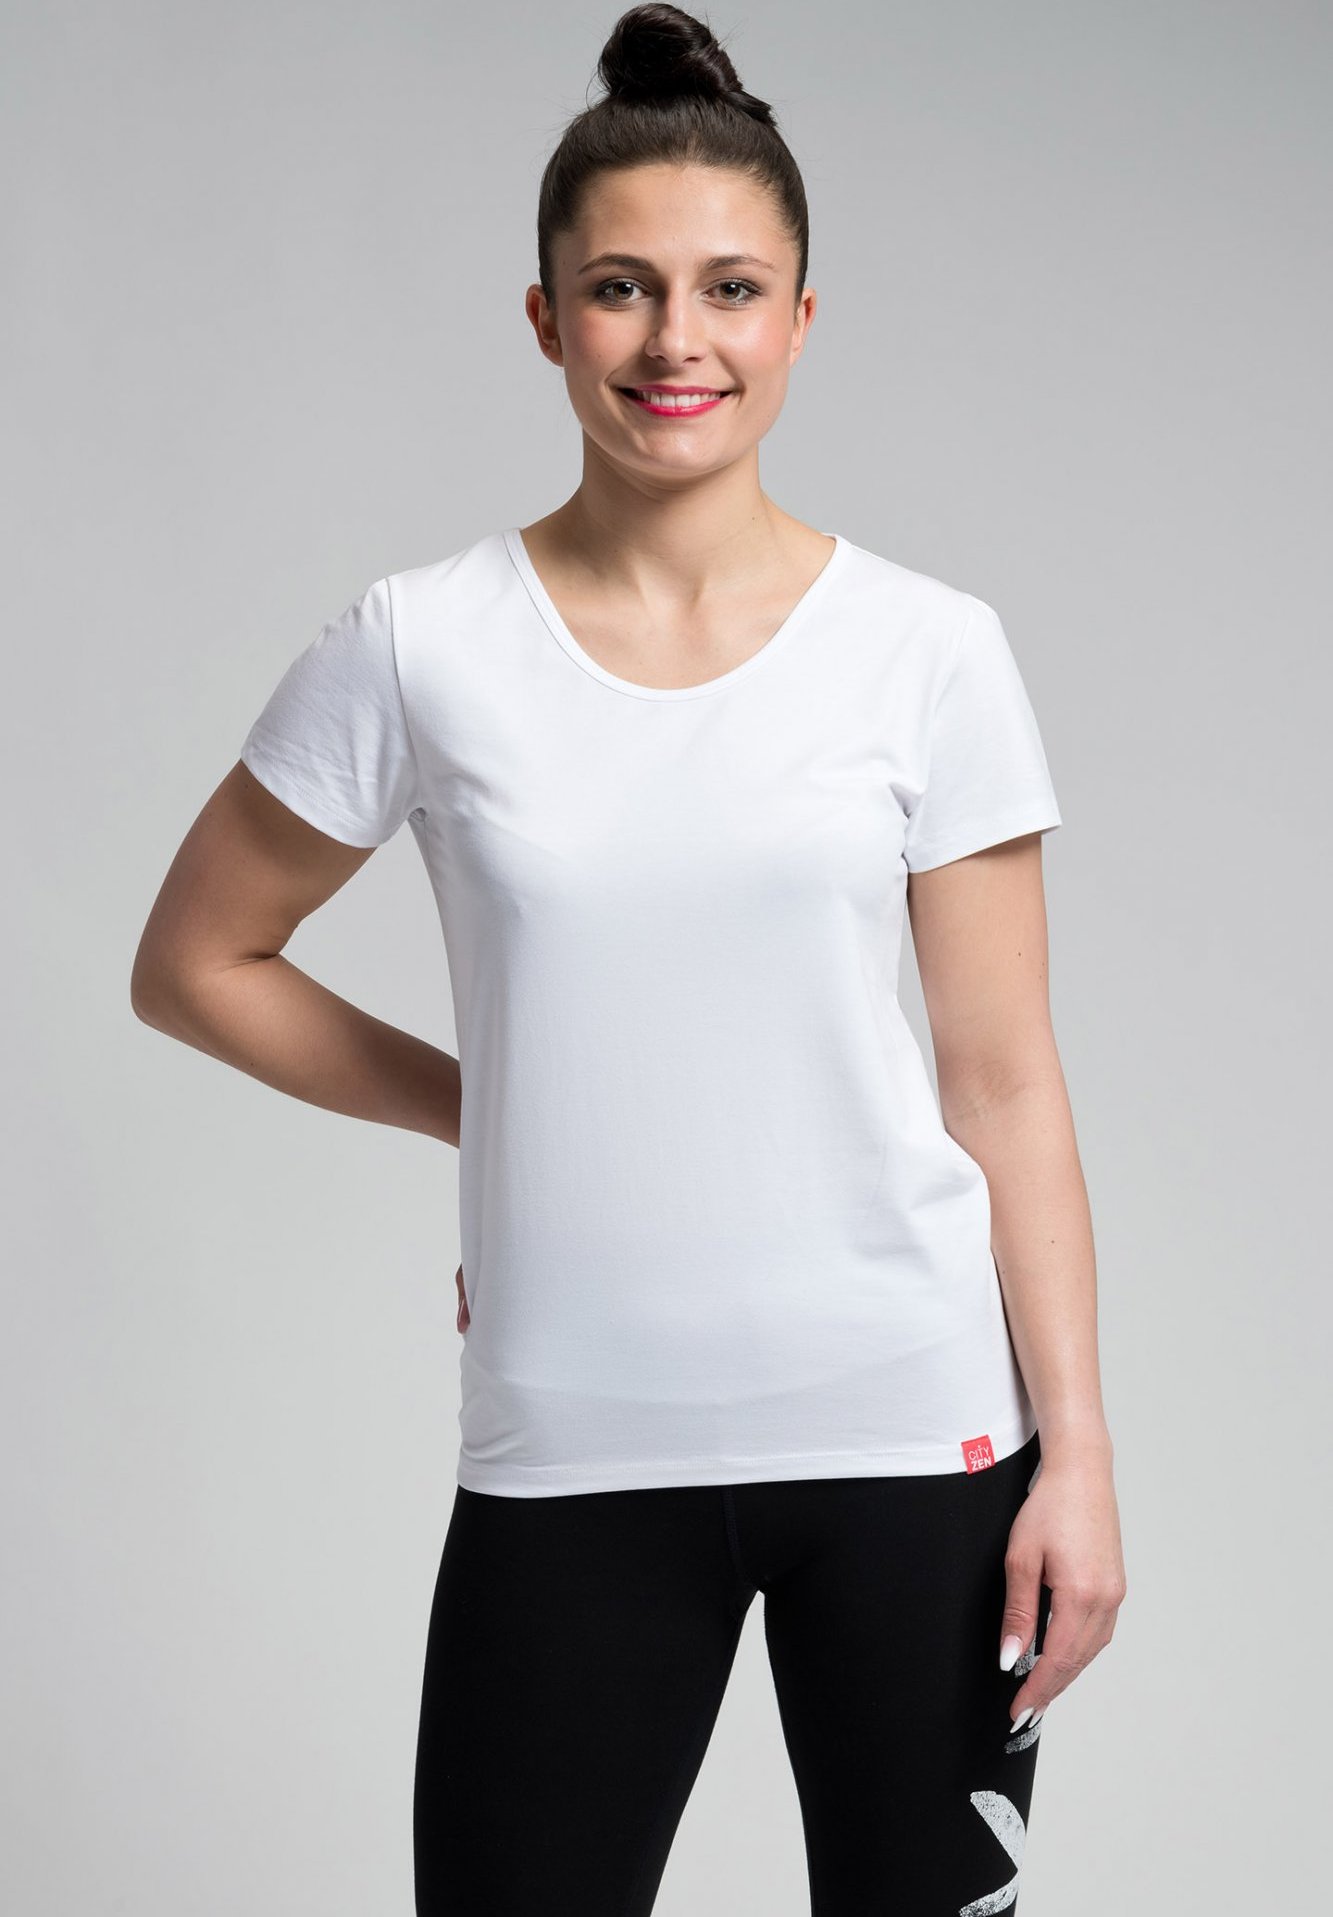 Dámské bavlněné triko CITYZEN bílé, klasické, s elastanem Velikost: XL/42